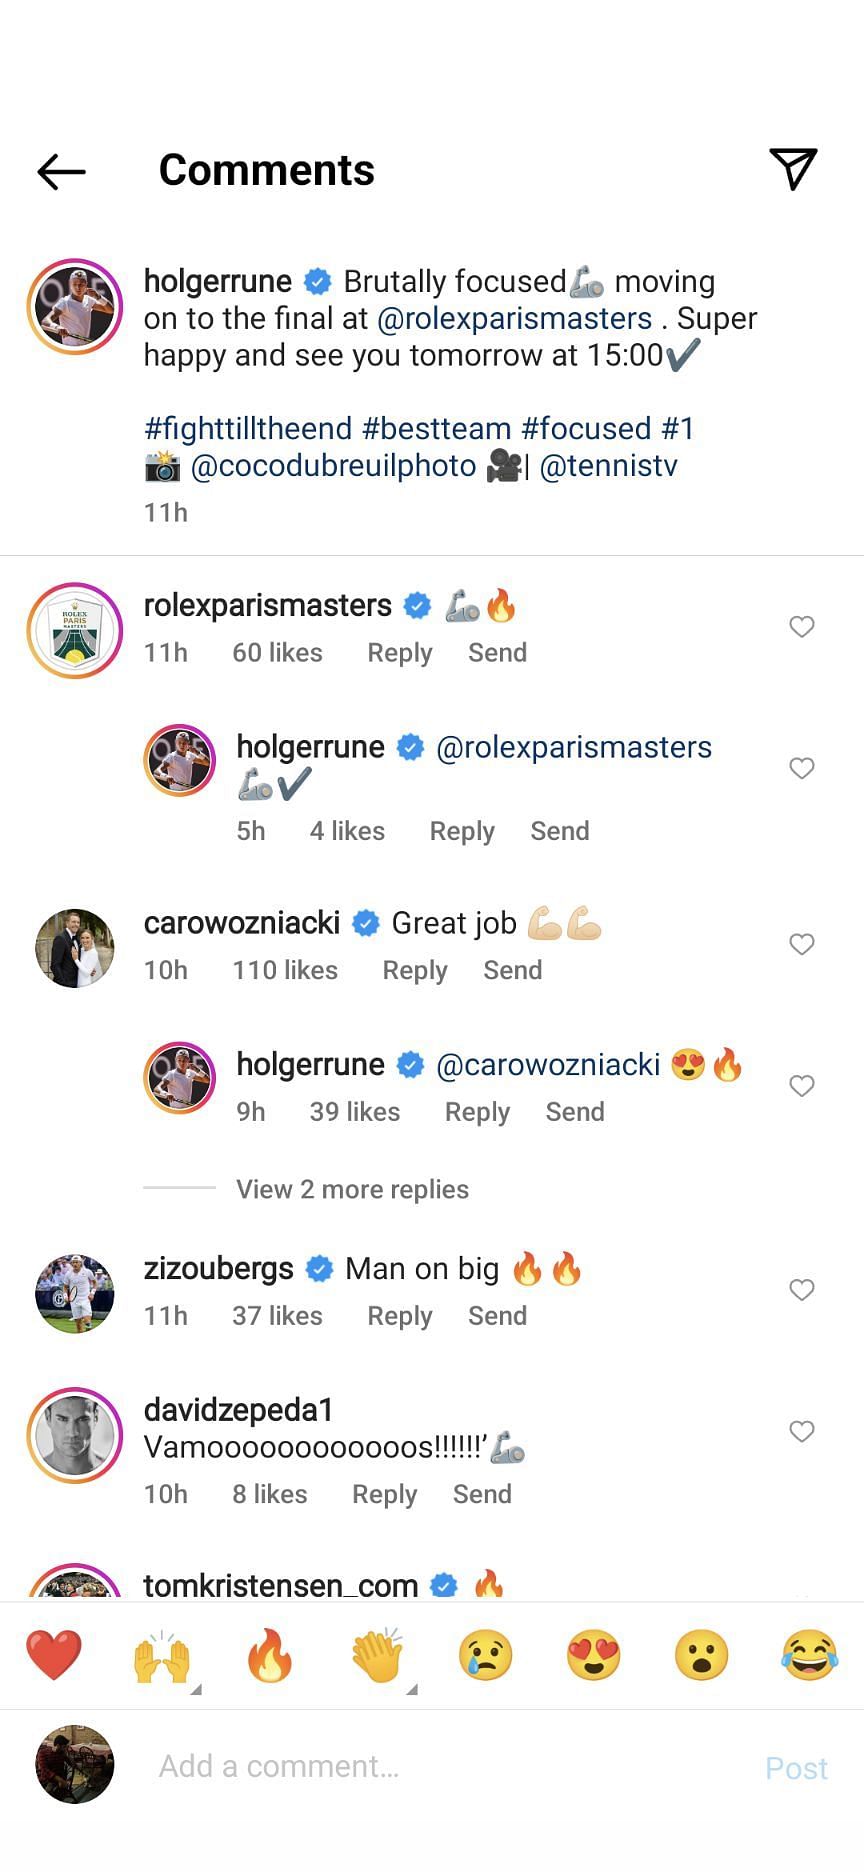 Caroline Wozniacki congratulated Holger Rune on his victory